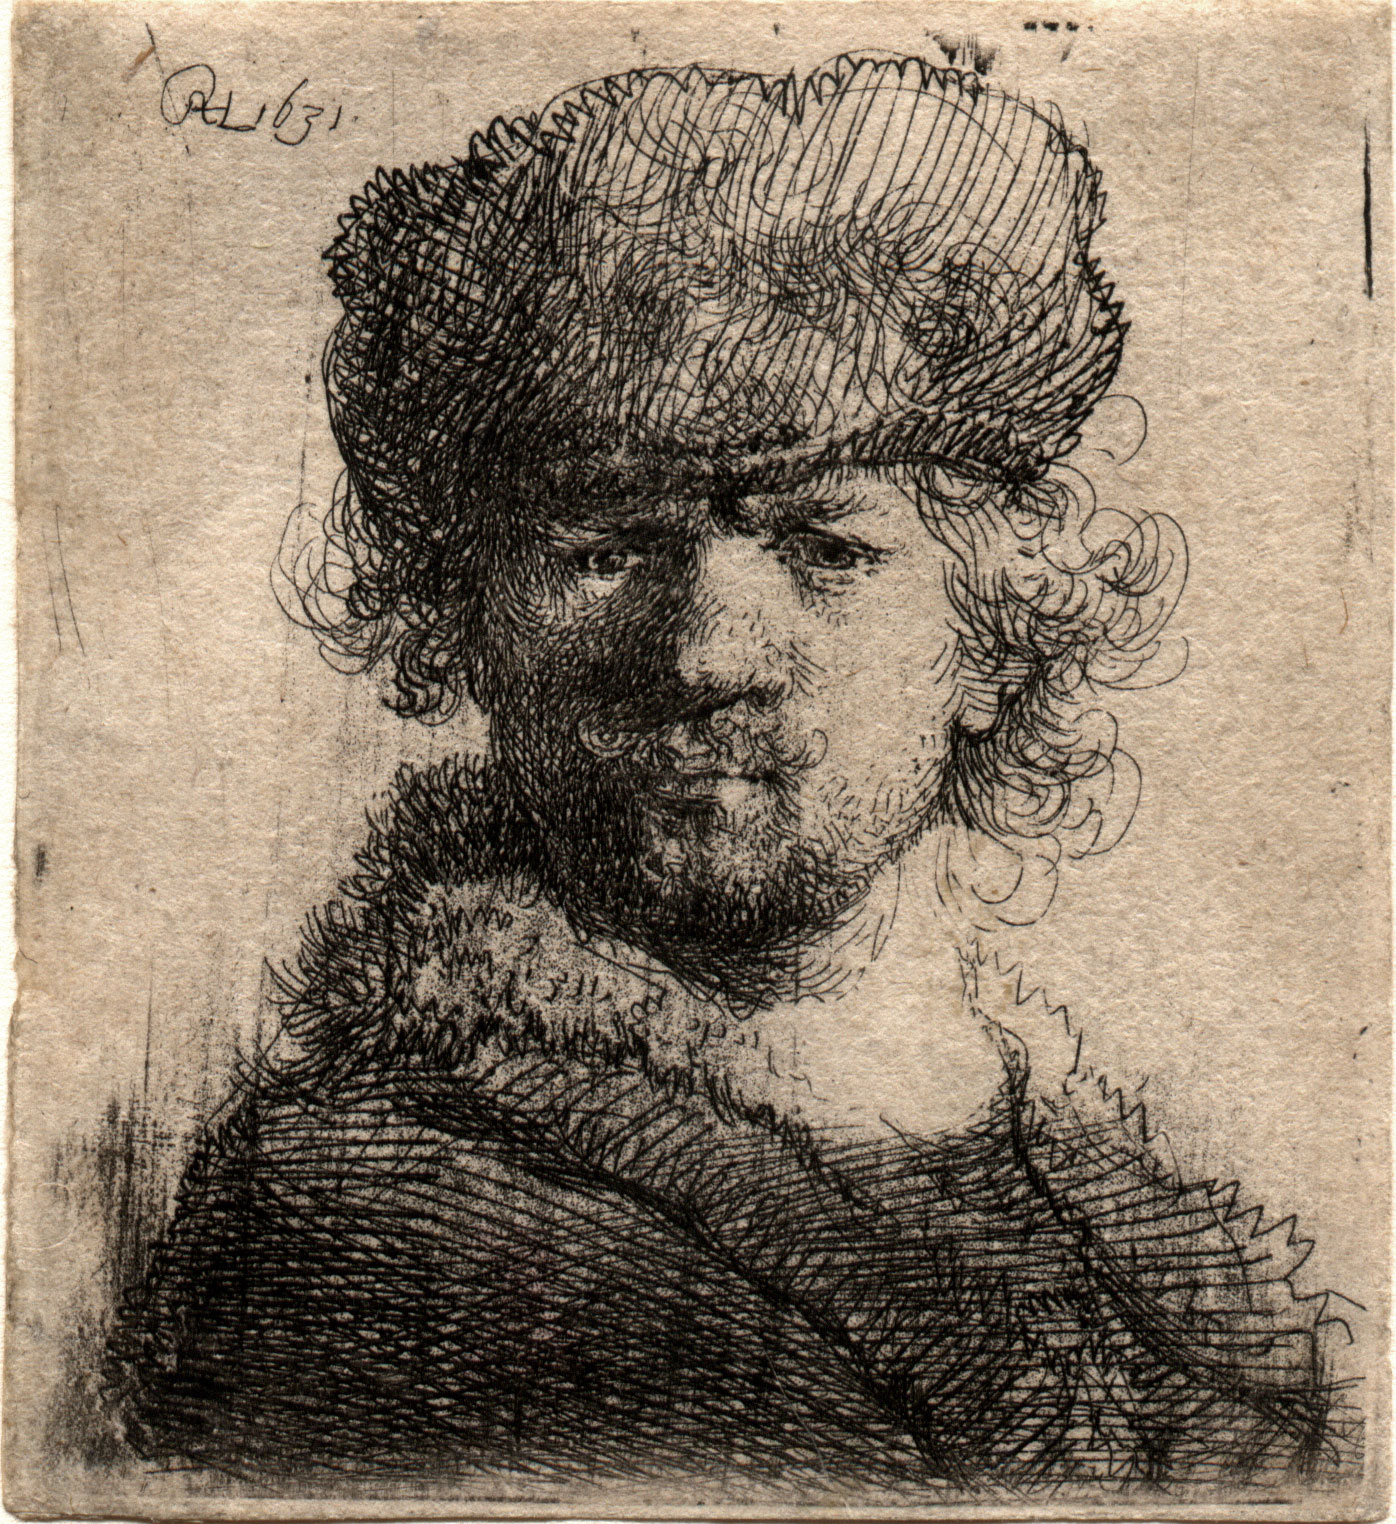 https://blog.stephens.edu/arh101glossary/wp-content/uploads/2016/07/Rembrandt-self-fur.jpg